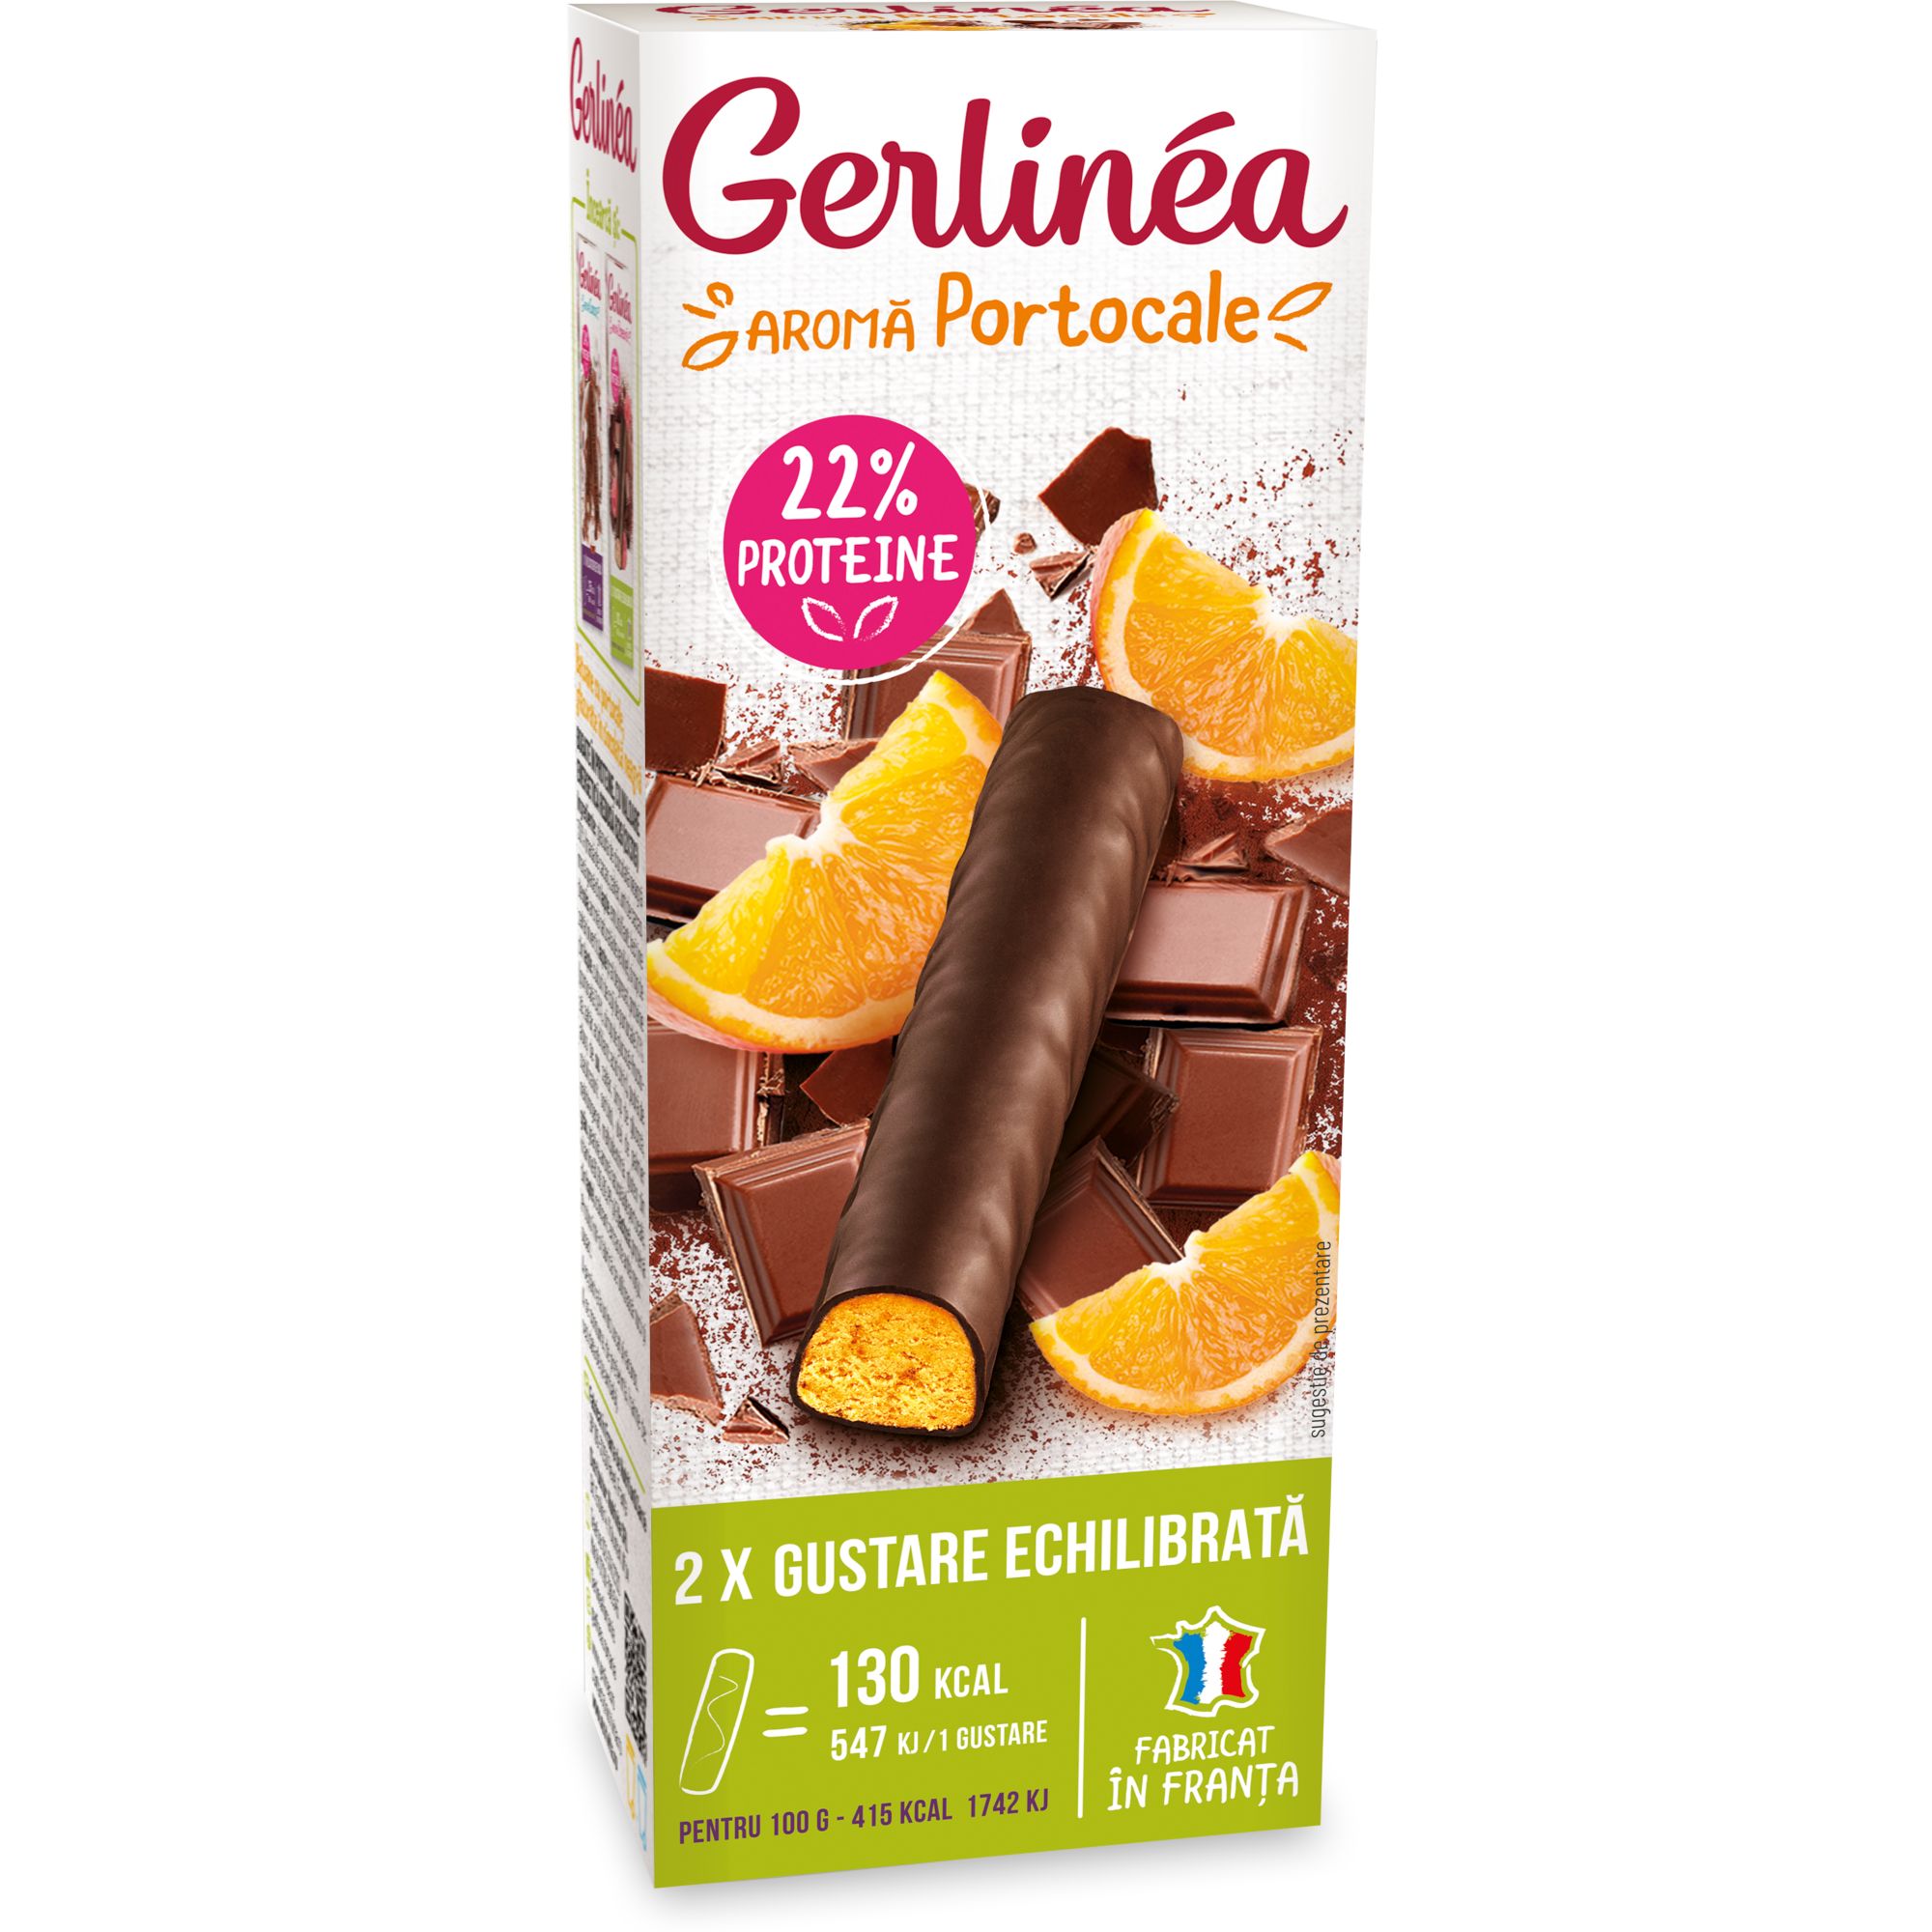 Bauturi & Energizante Cioco – Portocale 62g Gerlinea La reduceri 6+2g